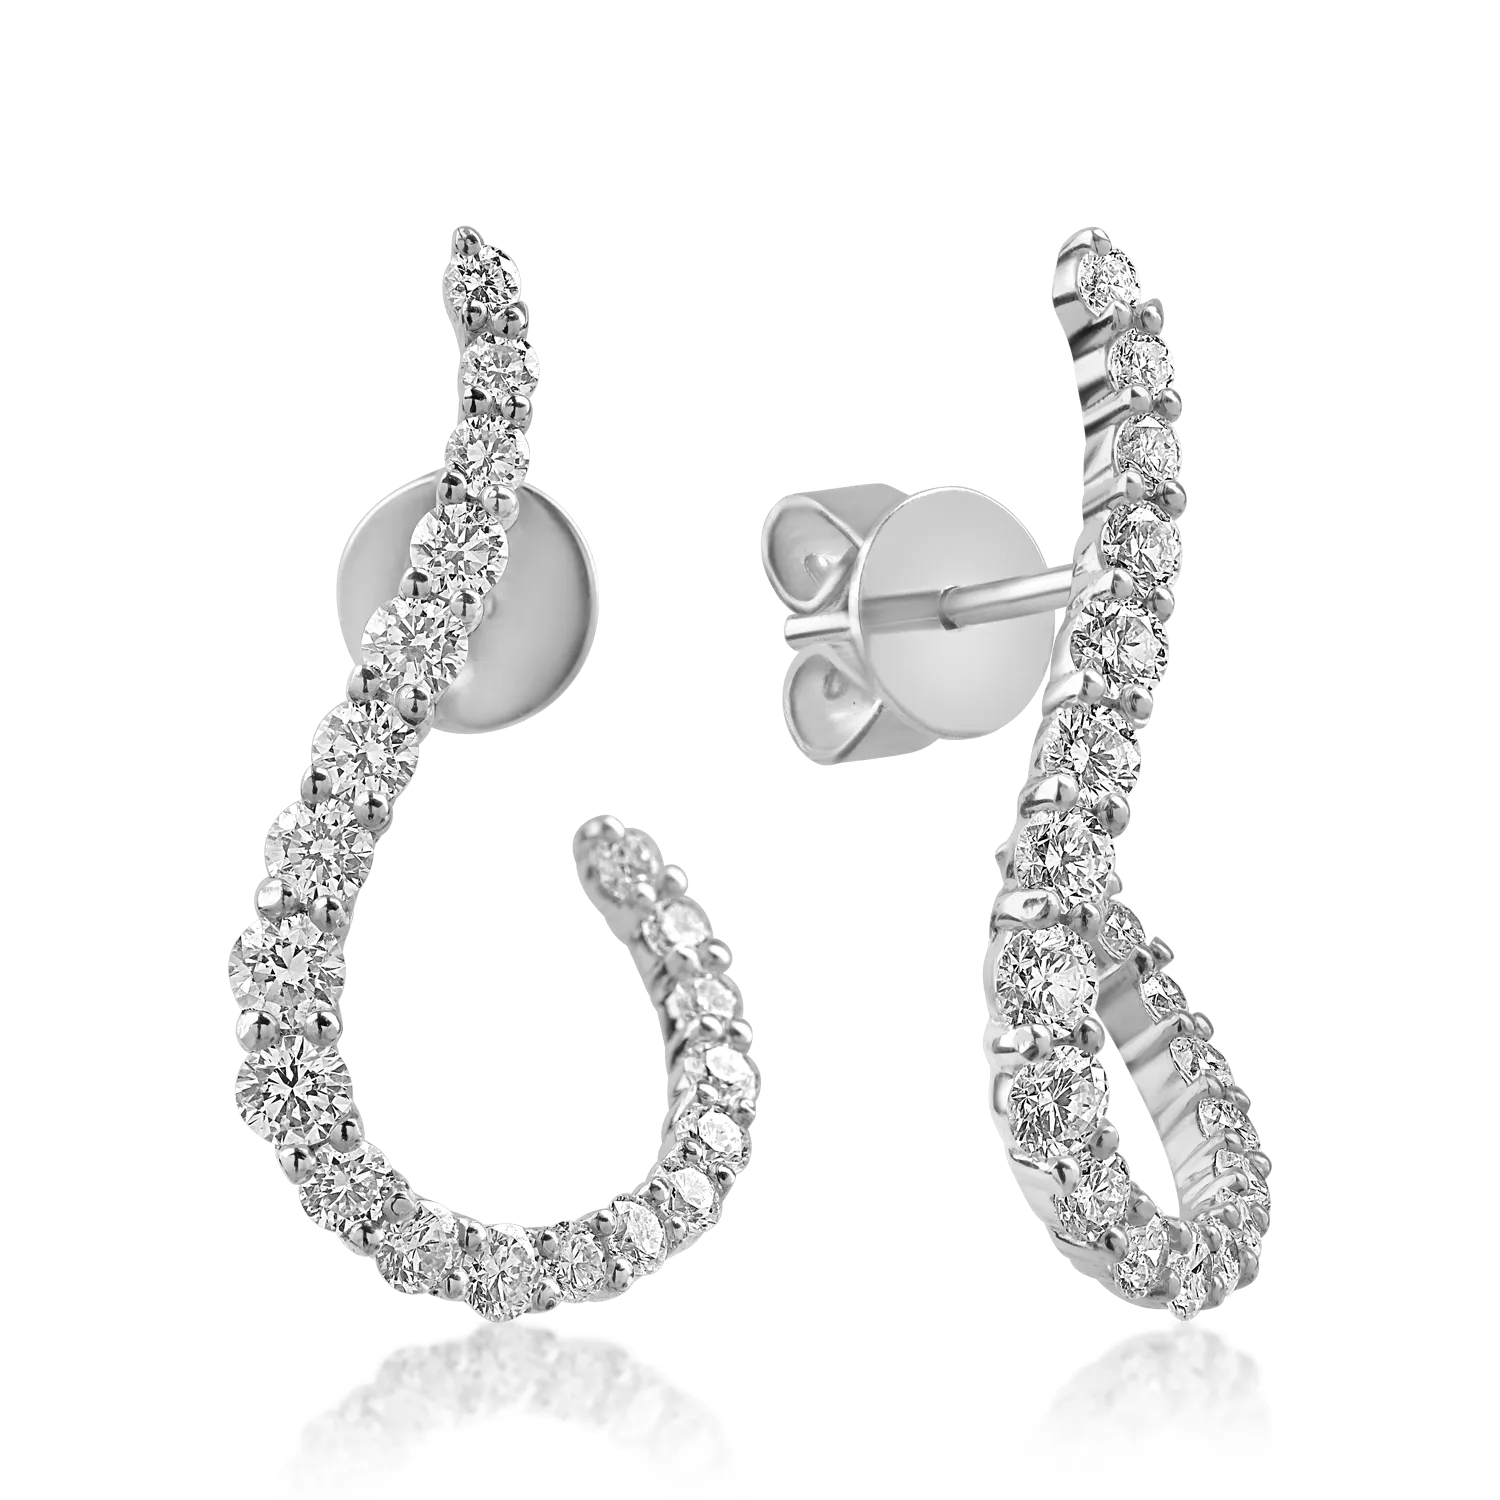 White gold geometric earrings with 0.8ct diamonds